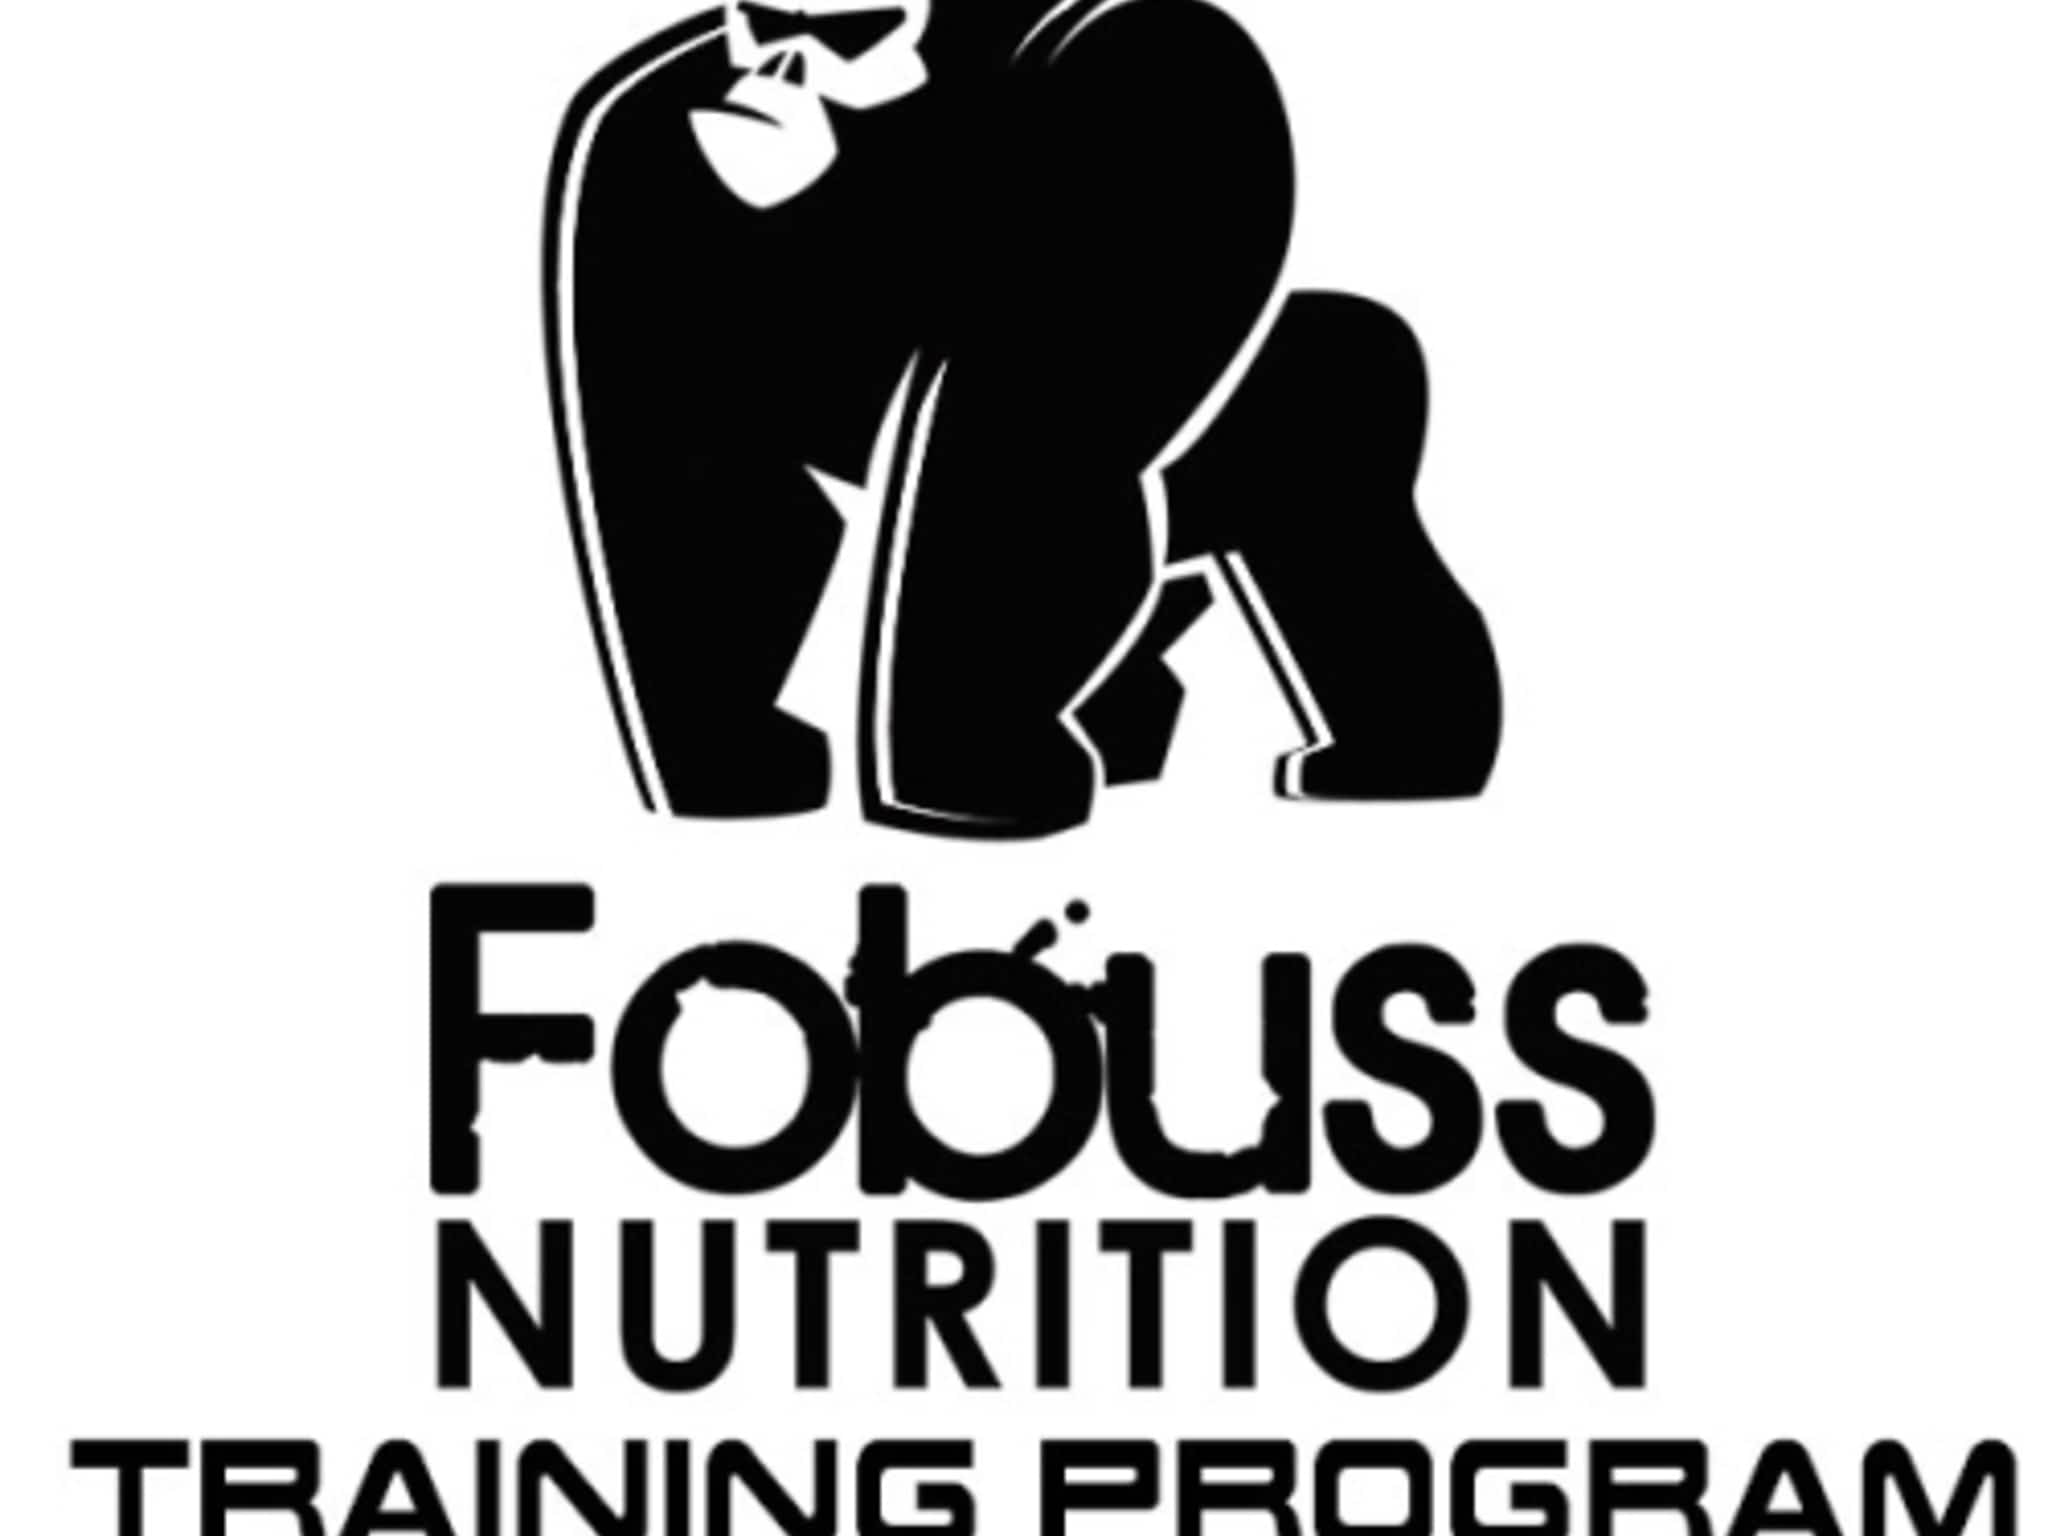 photo Fobuss Nutrition